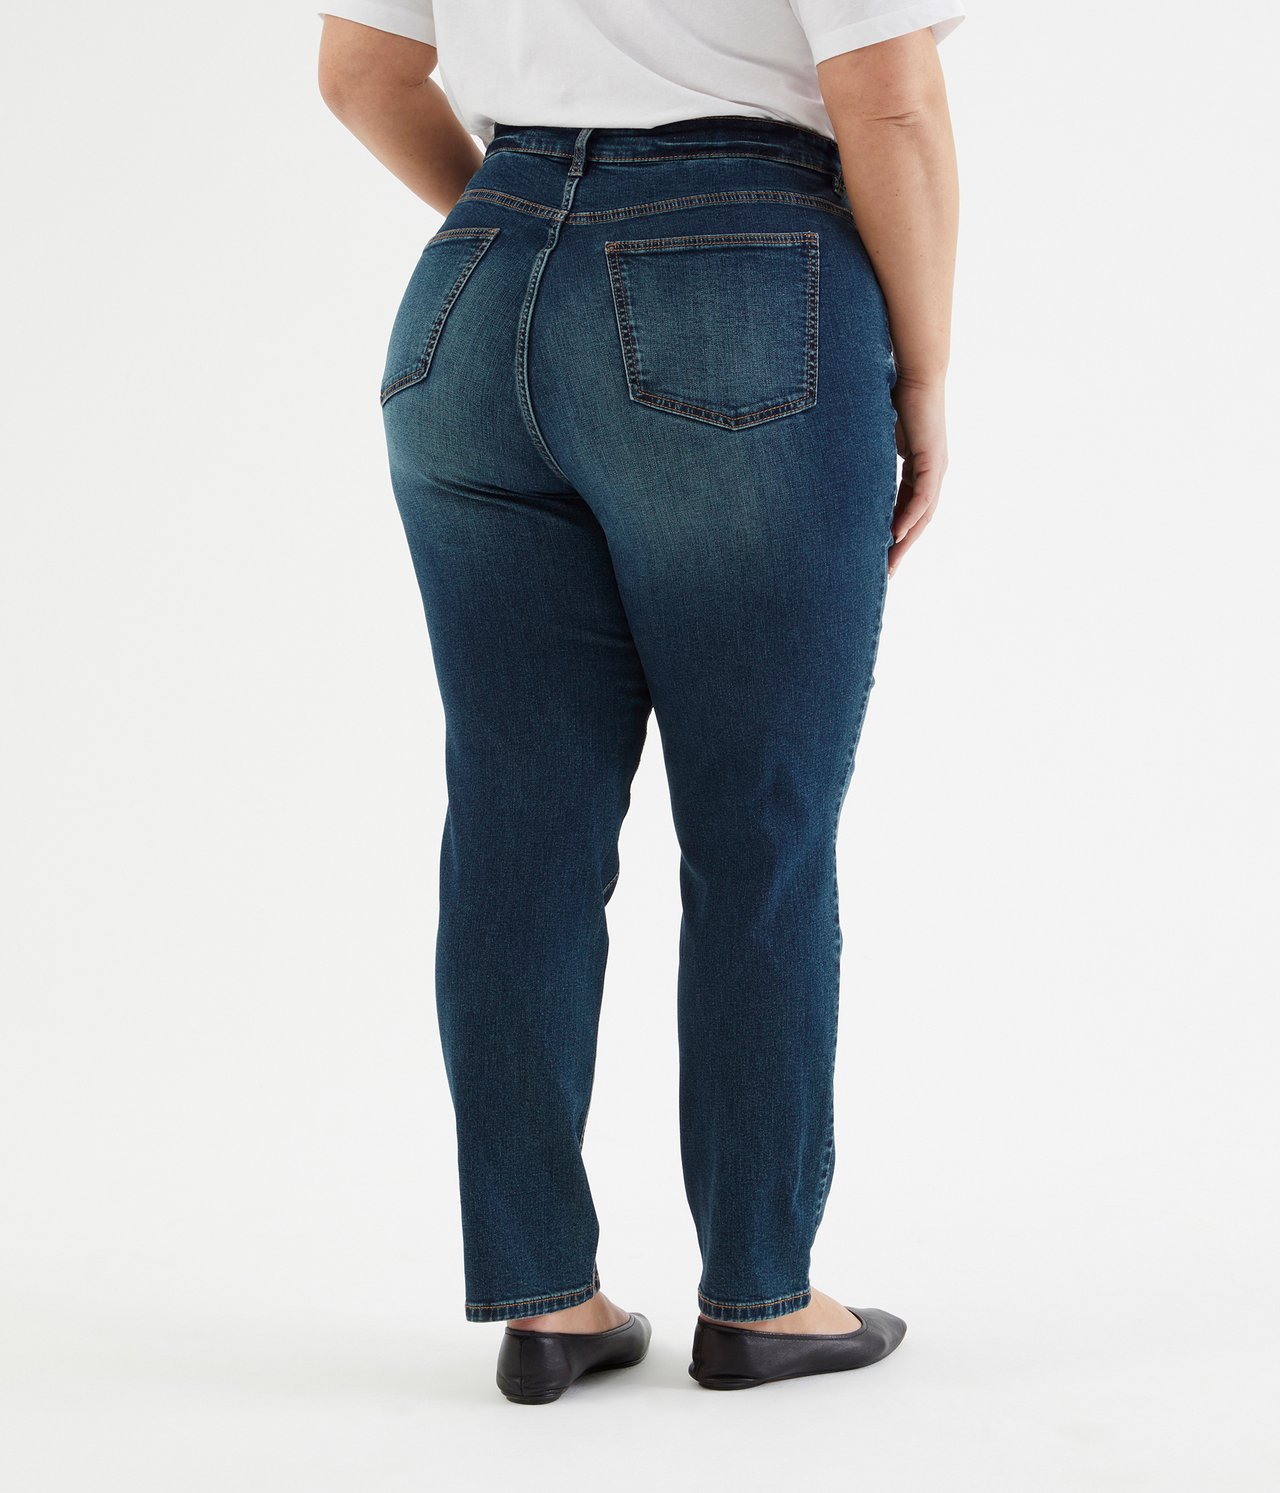 Jenny jeans straight slim fit - Denimi - 4